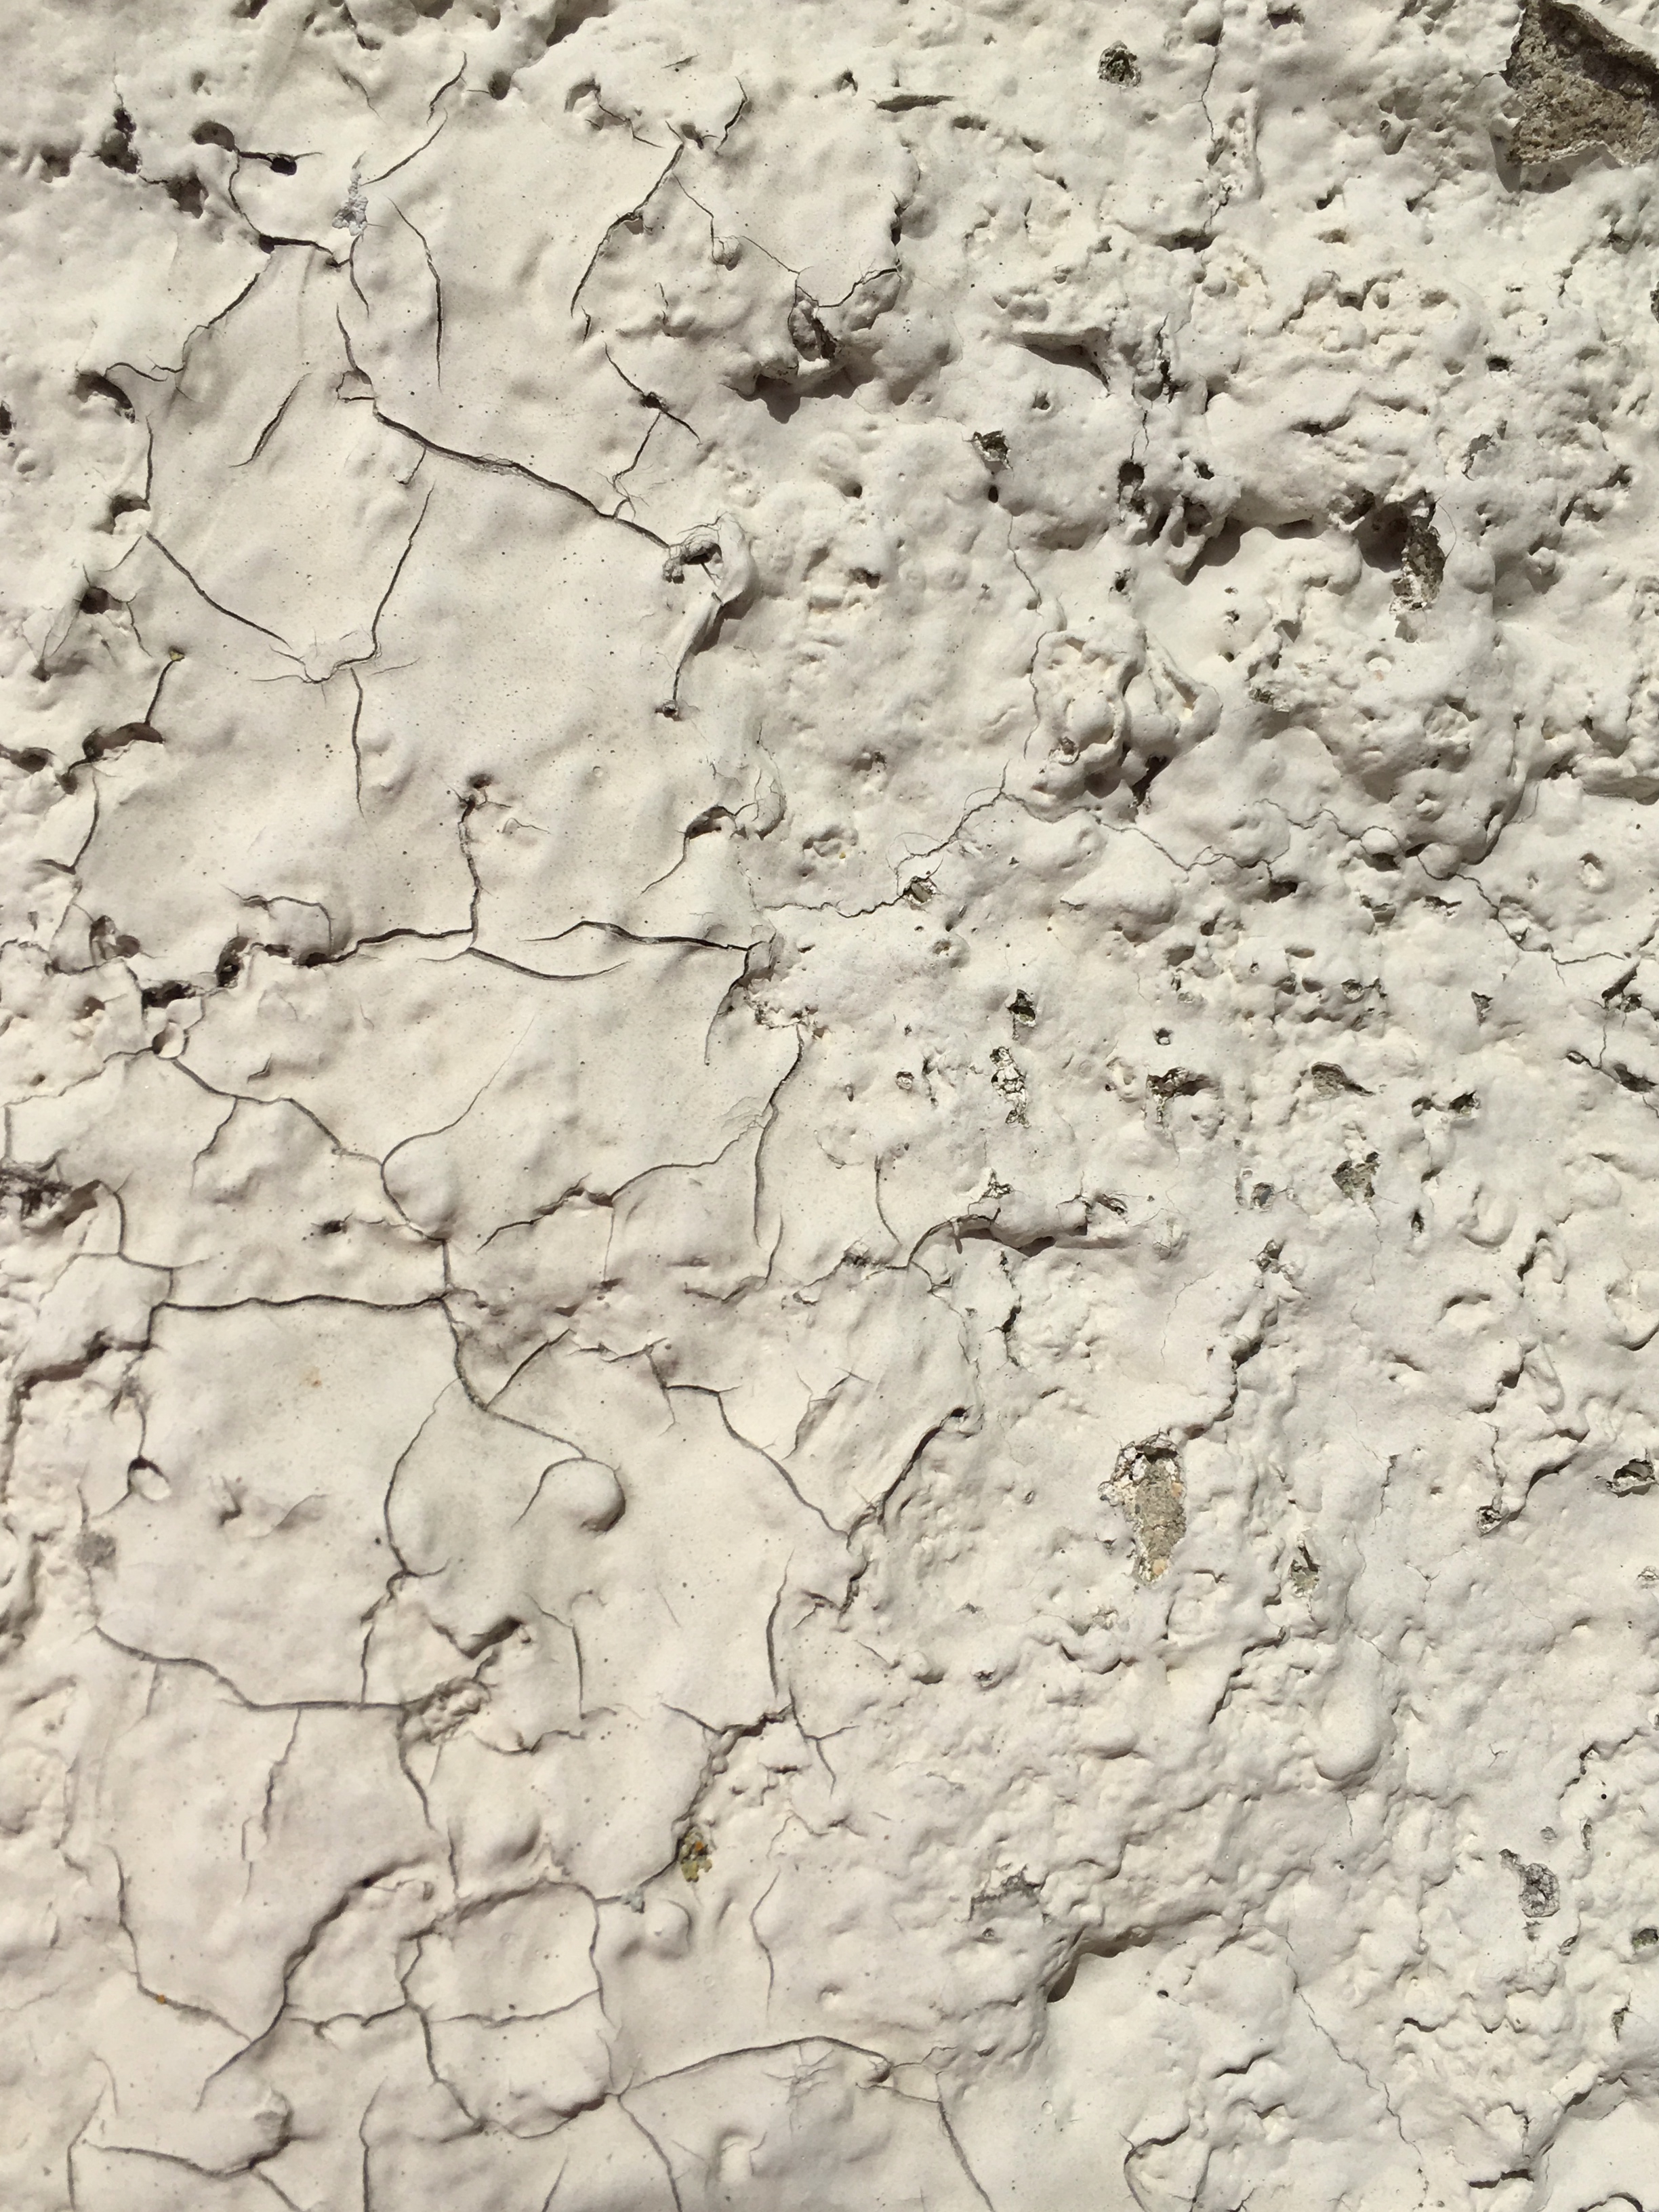 Cracked Wall Texture 2 by SPRSPRsDigitalArt on DeviantArt